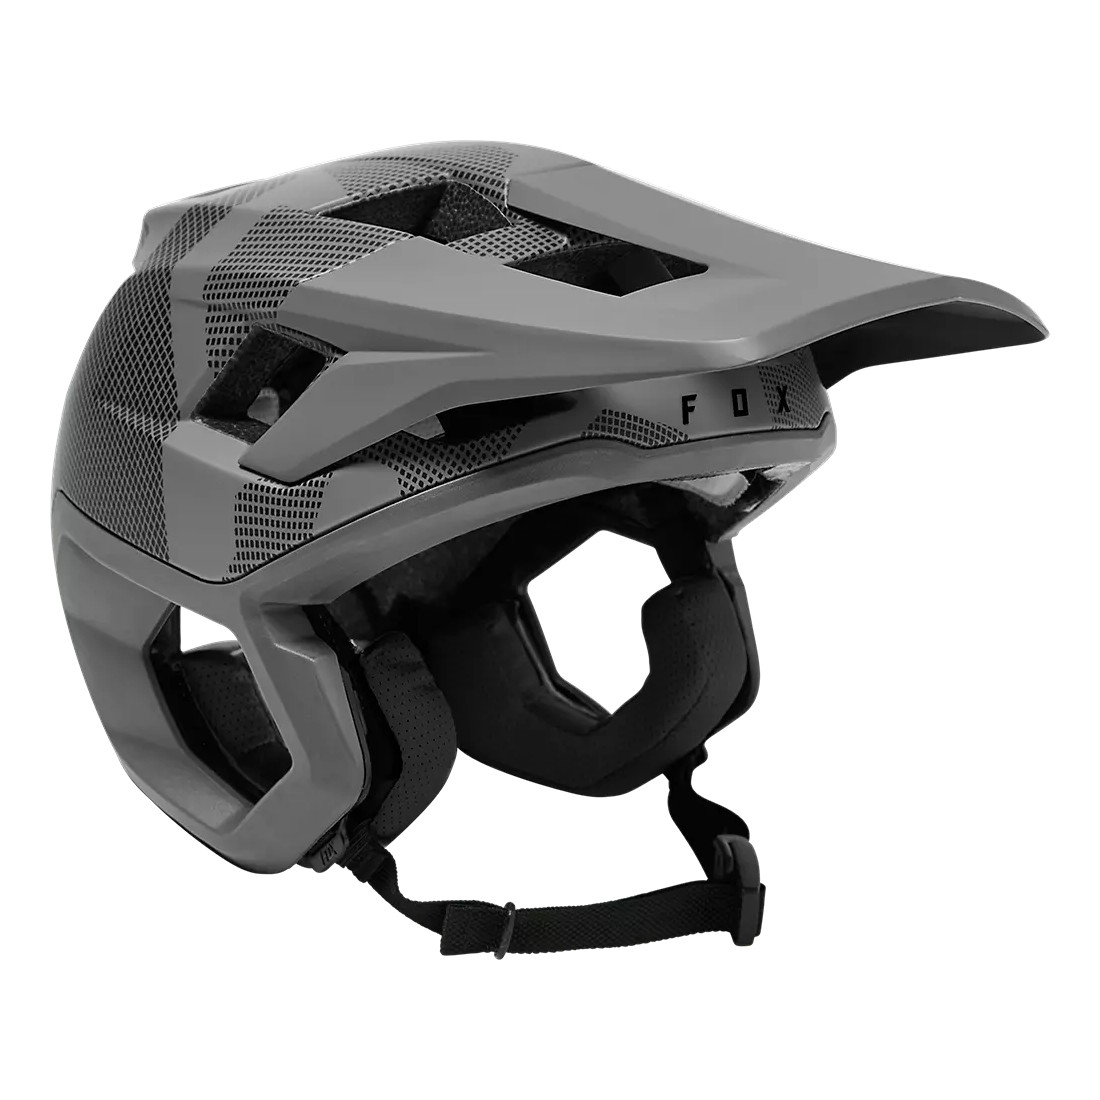 Dropframe Pro Camo Enduro Helmet Gray Camouflage Size S (52-54 cm)